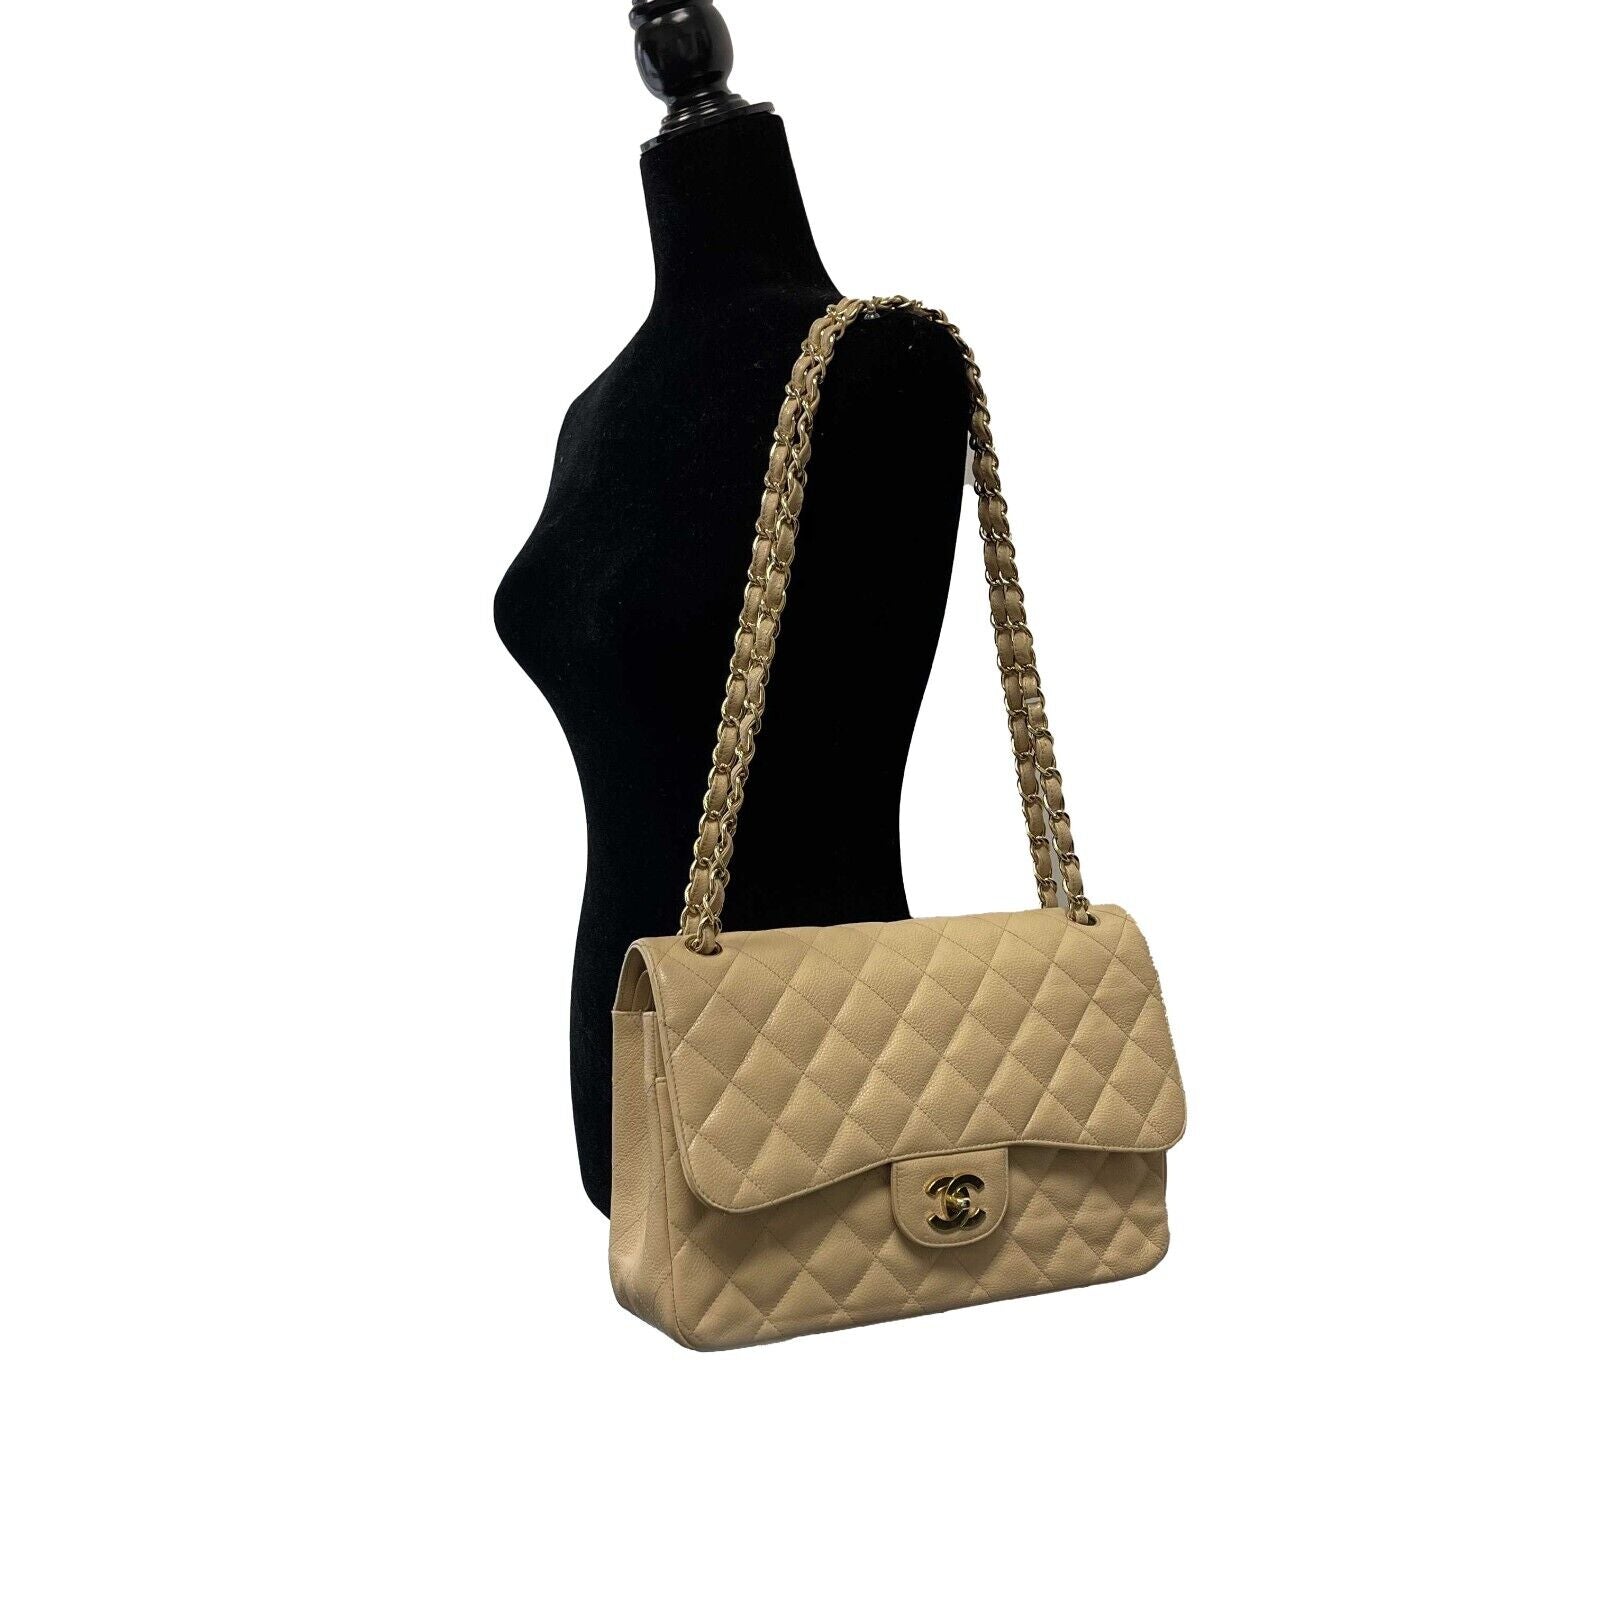 Túi Chanel 19 Flap Bag nâu da cừu 26cm best quality